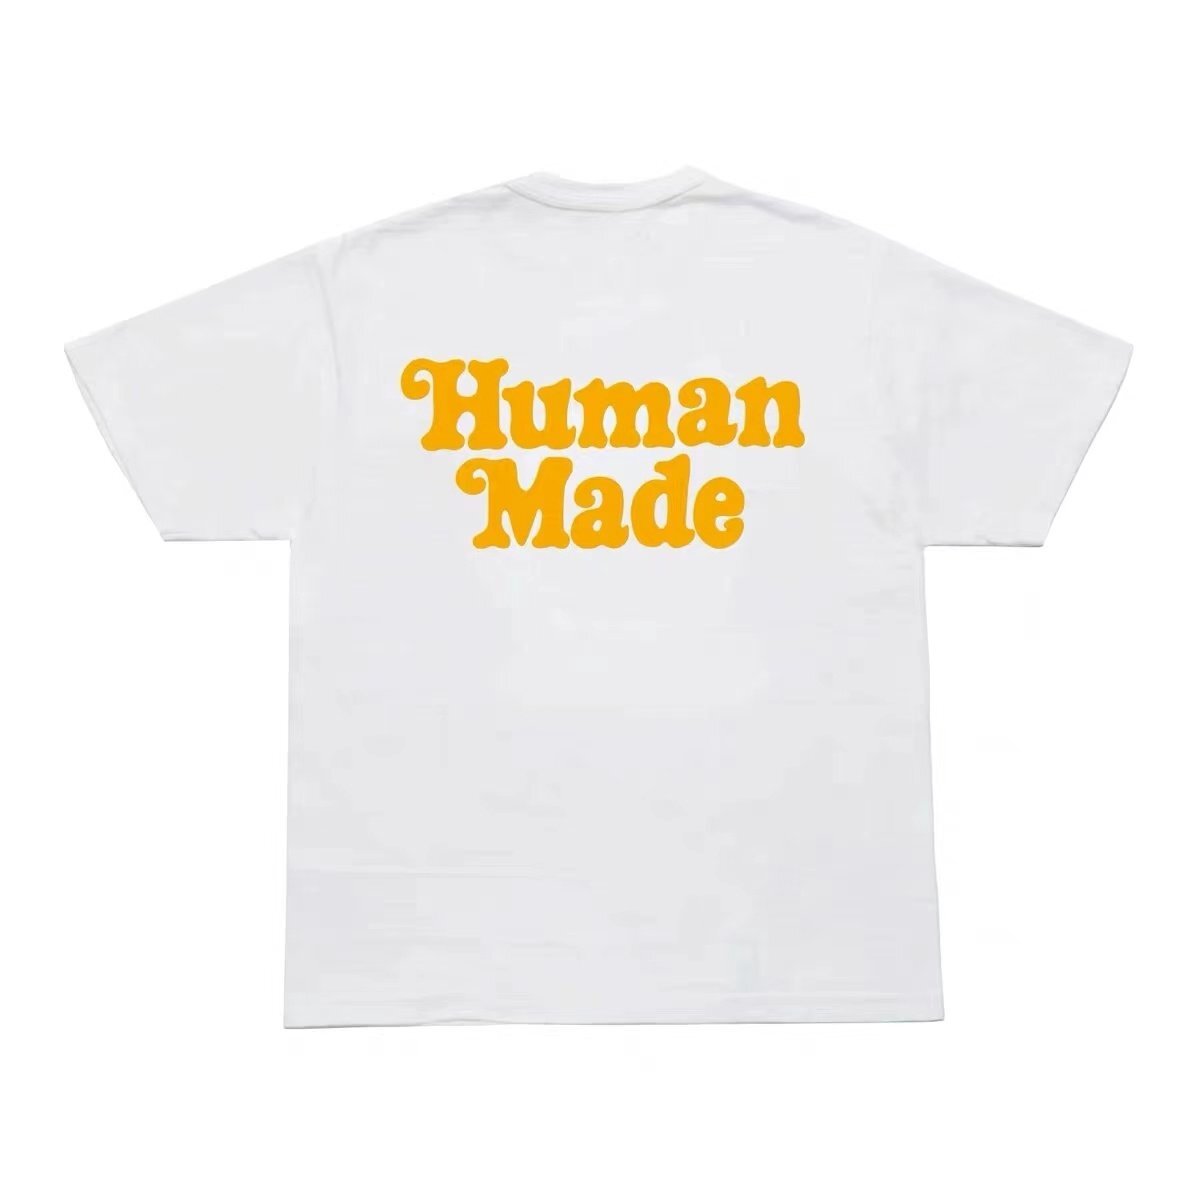 HUMAN MADE verdy vick Tshirt white Medium 半袖 Tシャツ ホワイト M 中古 TN 1の画像2